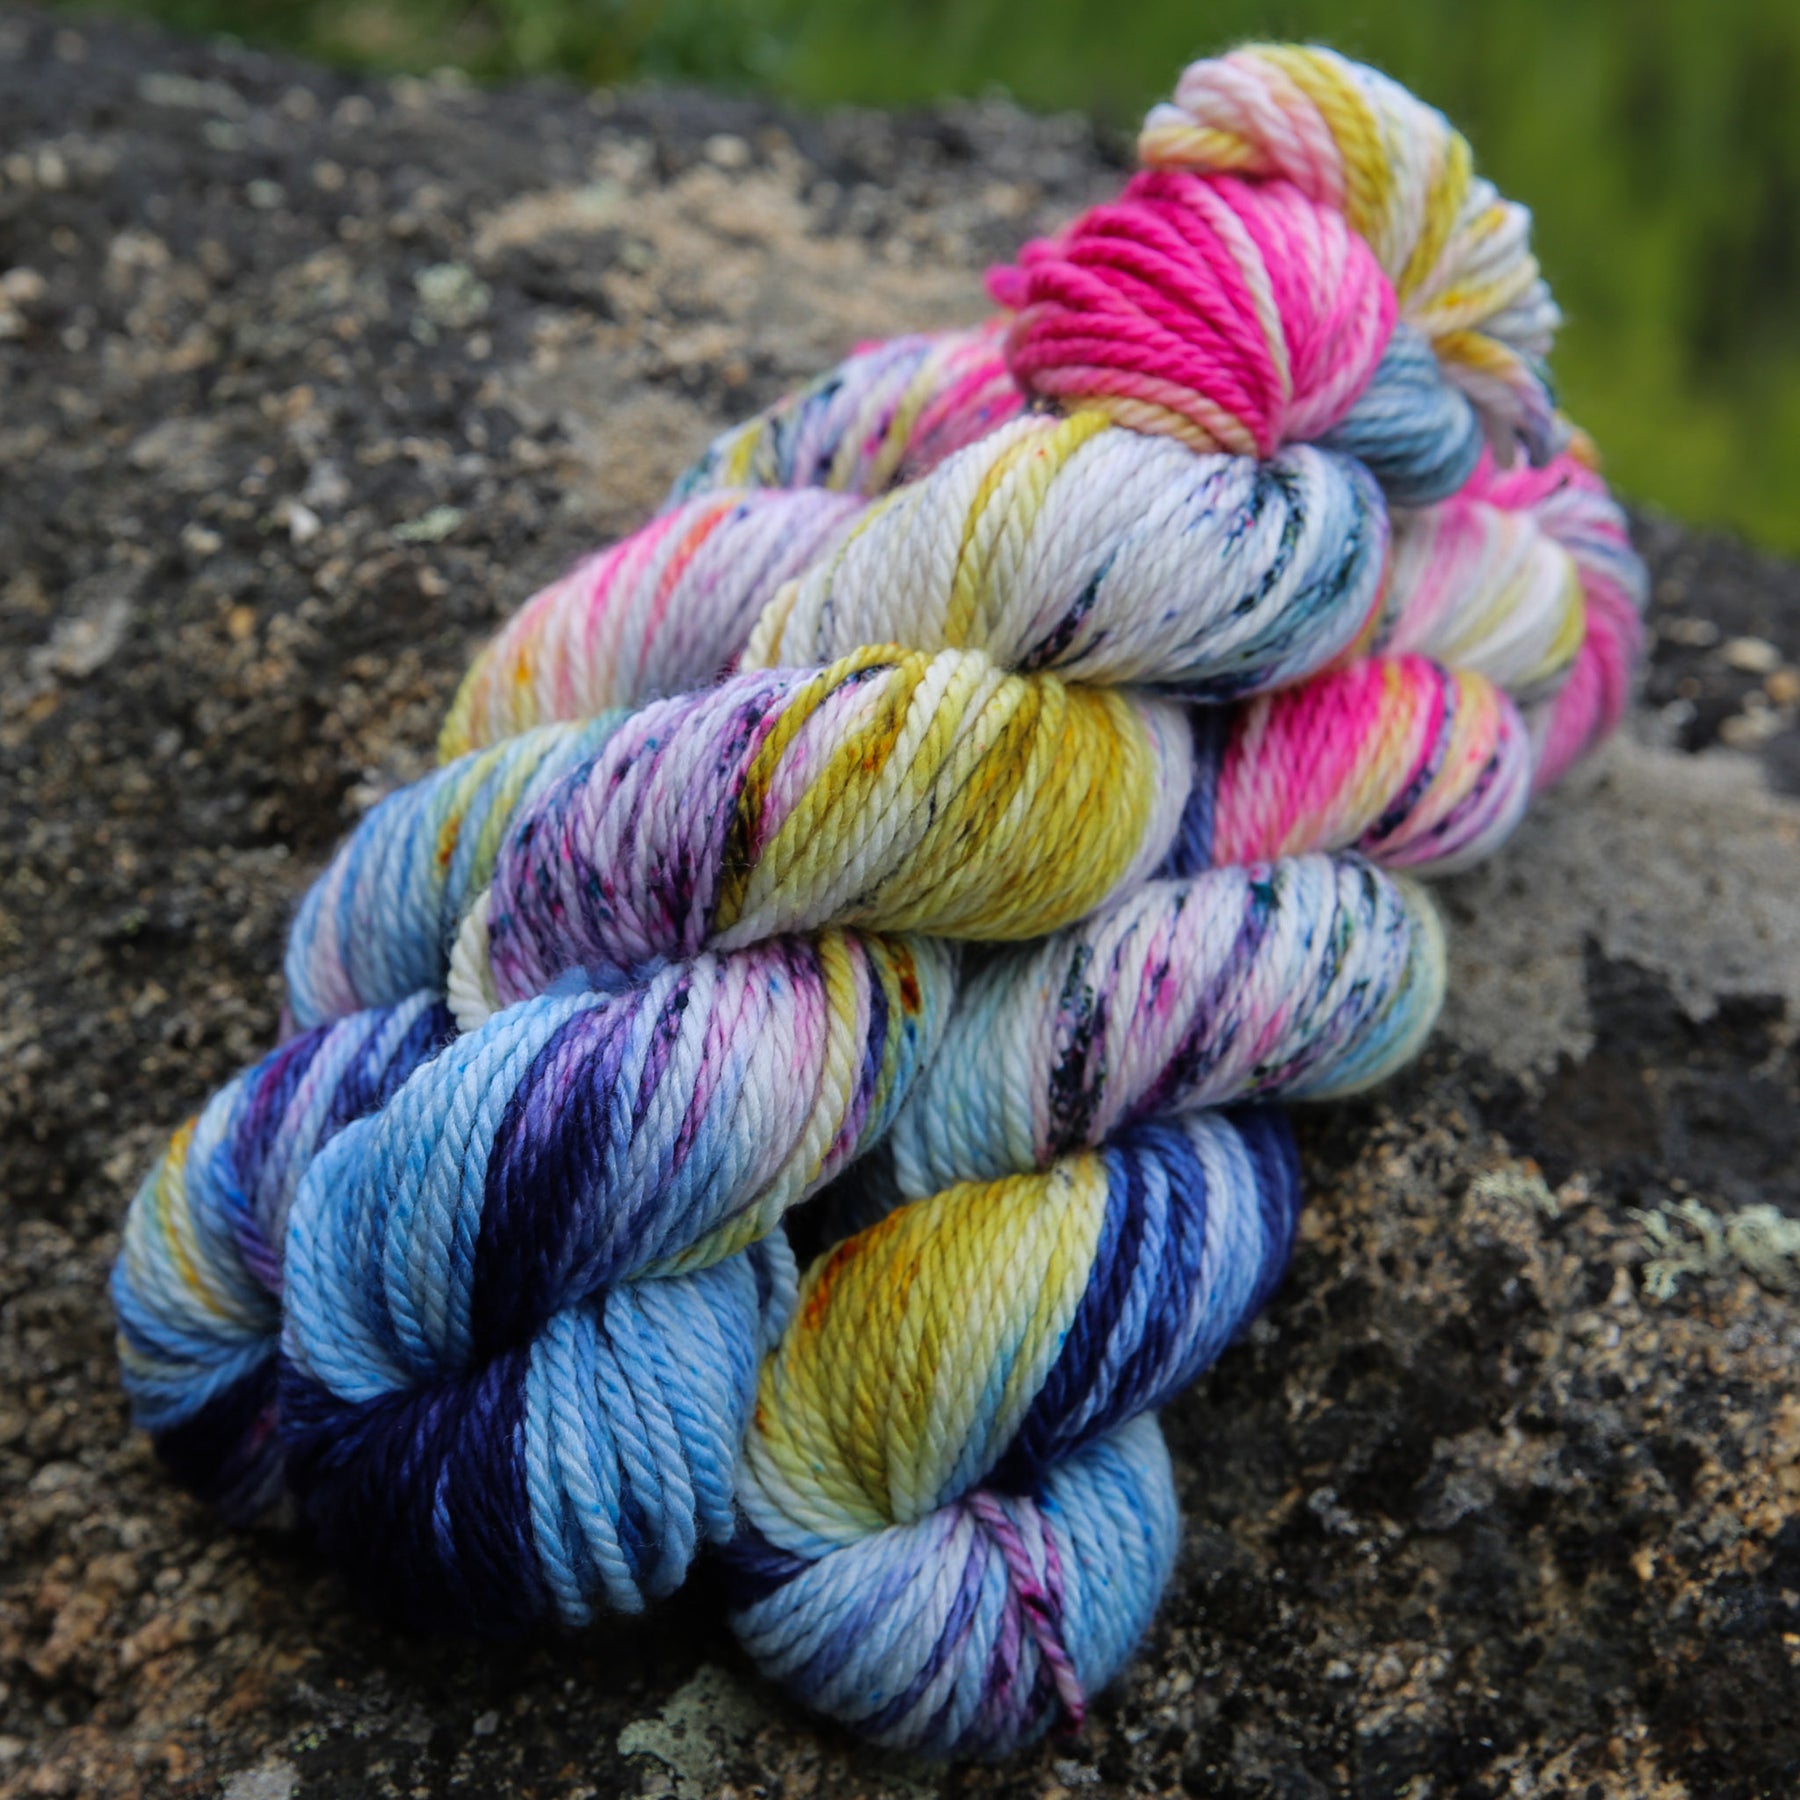 20 Acrylic Yarn Skeins - 438 Yards Multicolored Yarn in Total